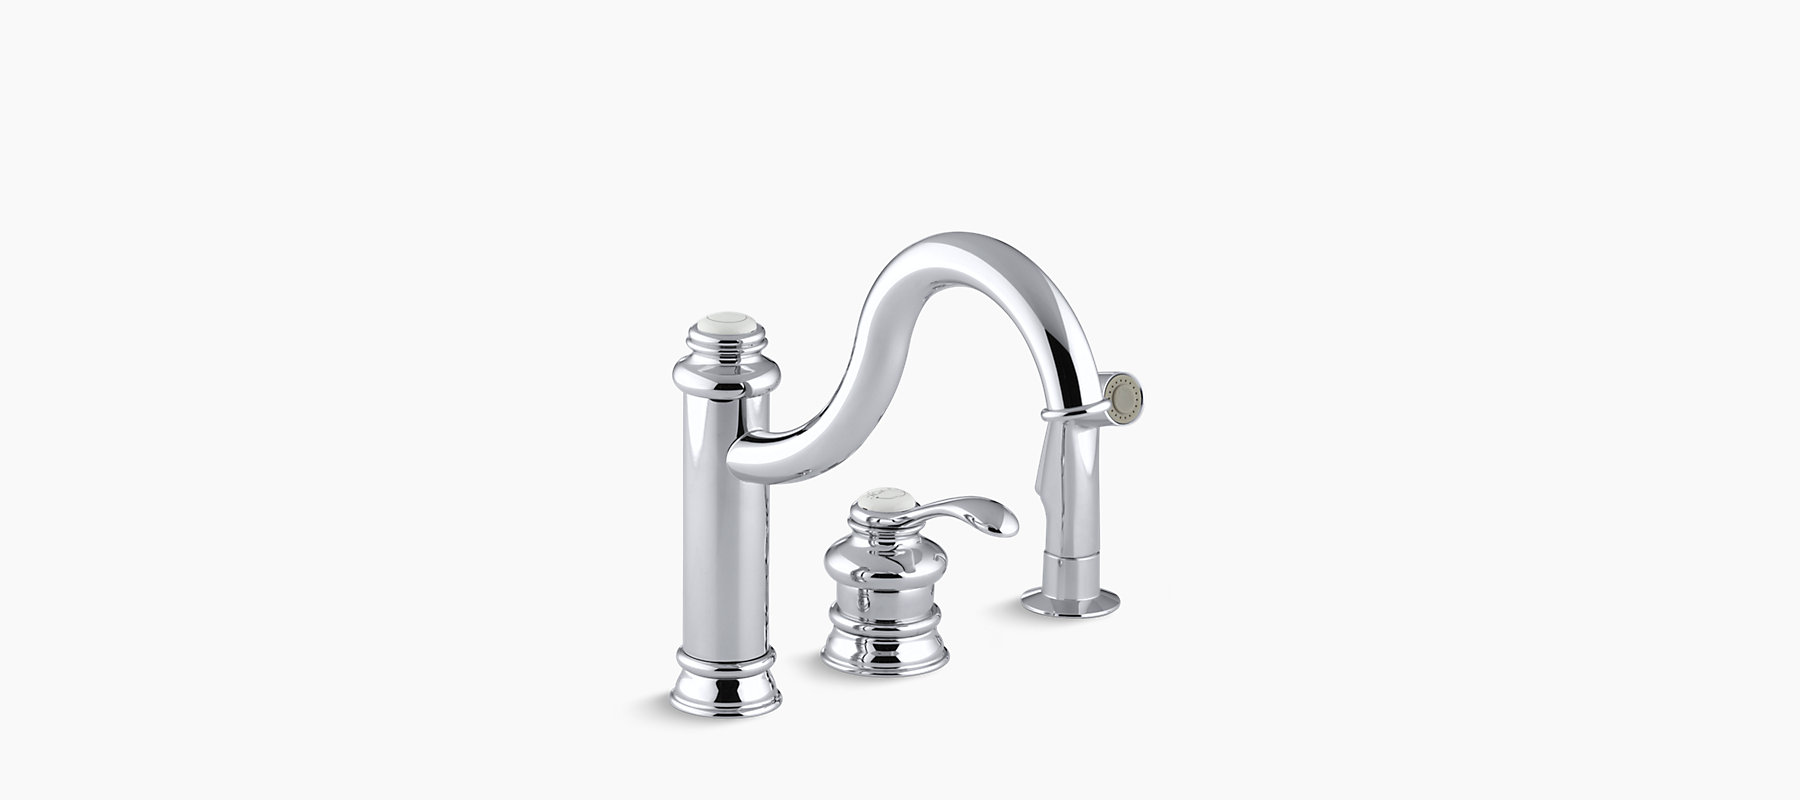 Fairfax Single Handle Remote Valve Kitchen Sink Faucet K 12185